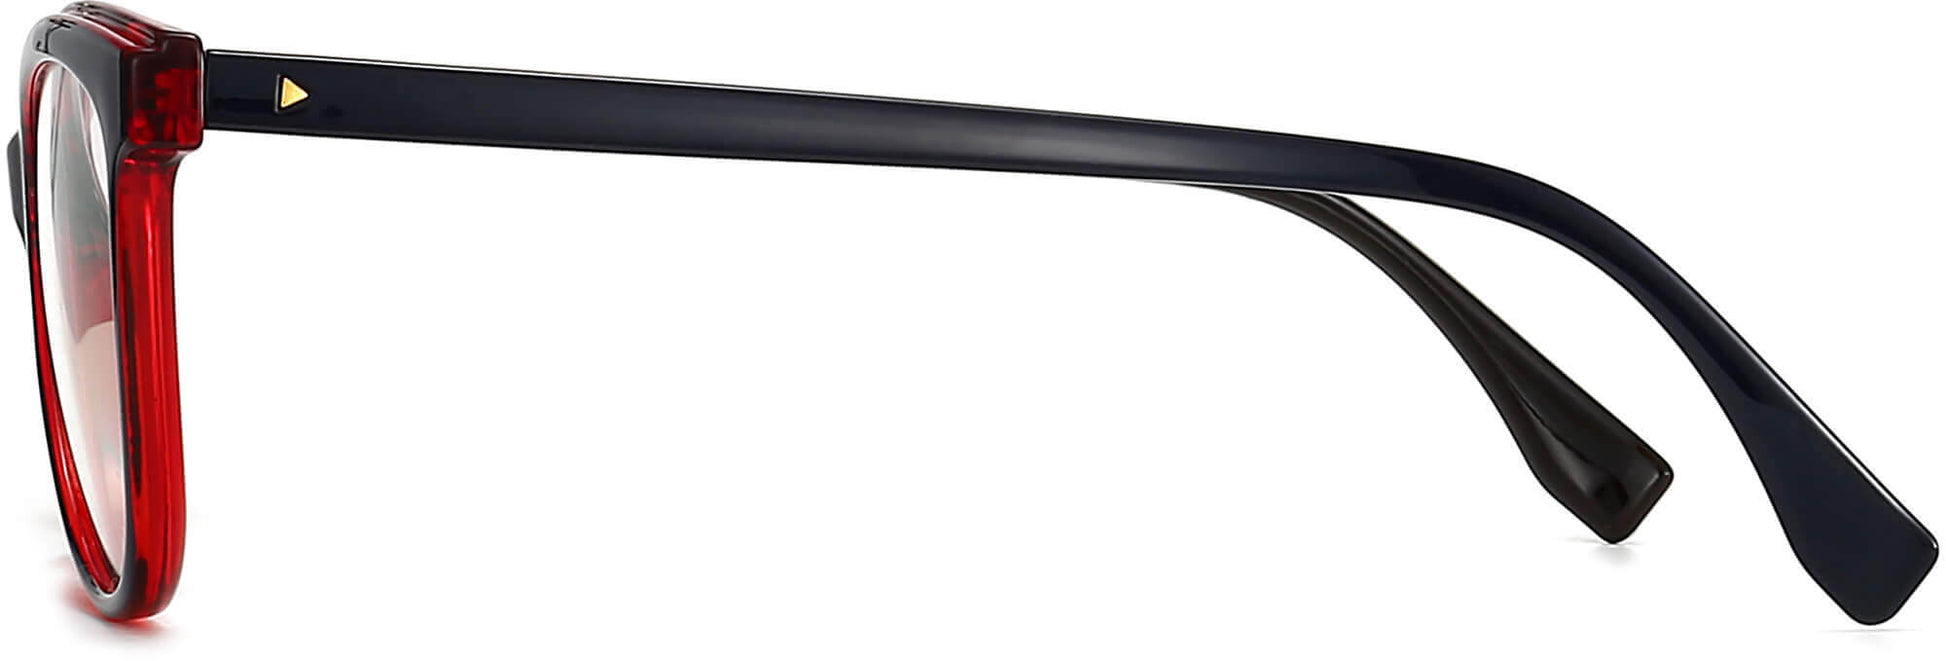 Stilsky Cateye Black Eyeglasses from ANRRI, side view